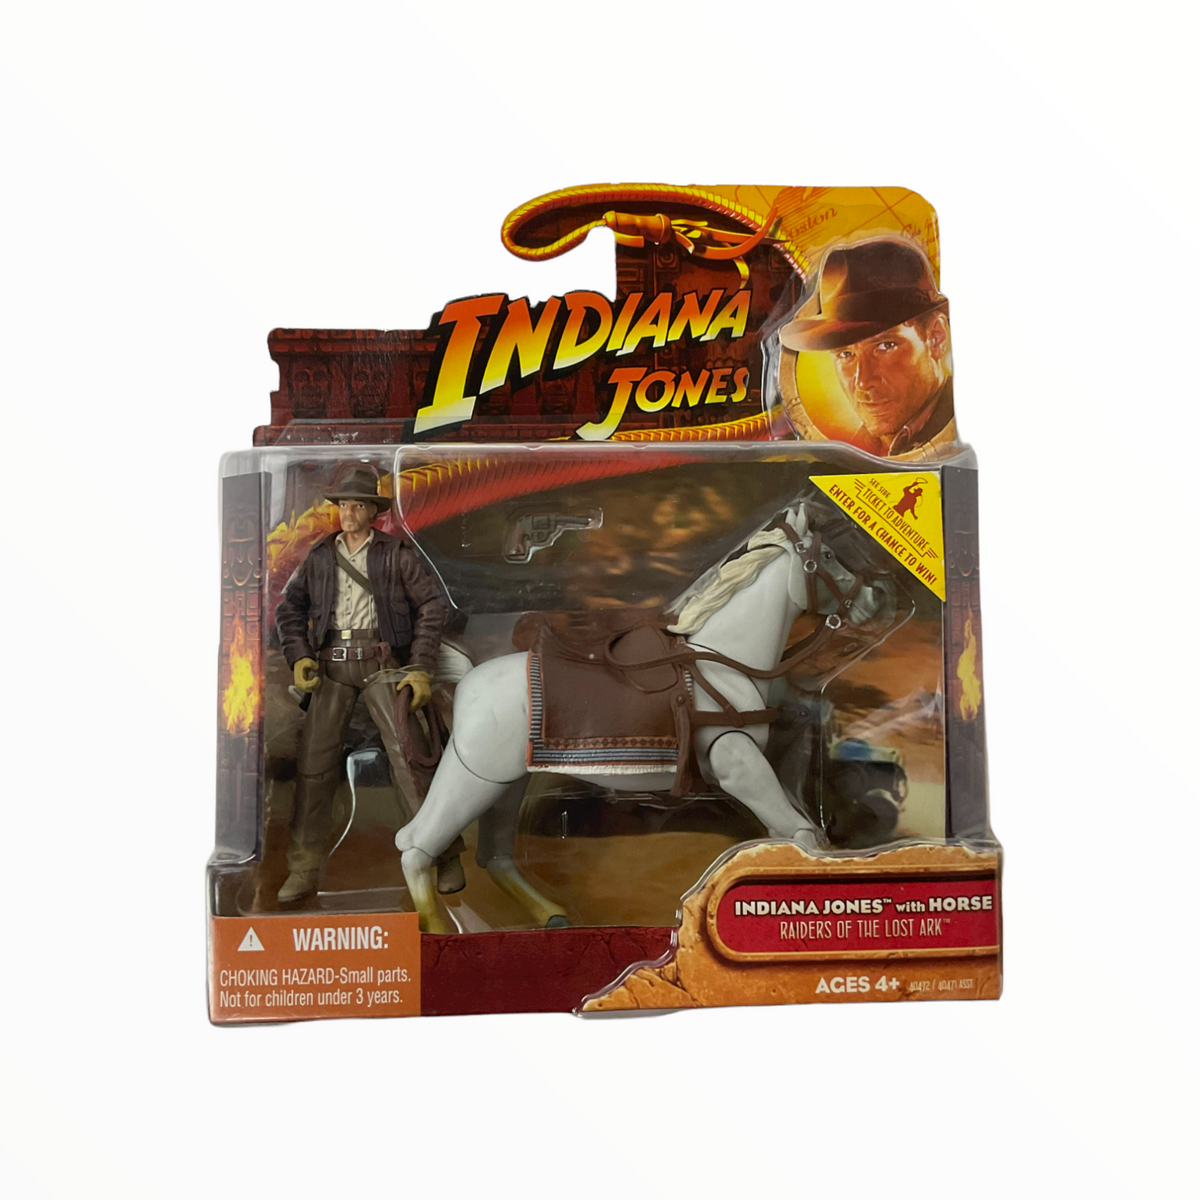 Indiana Jones - Raiders of the Lost Ark - Indiana Jones with Horse